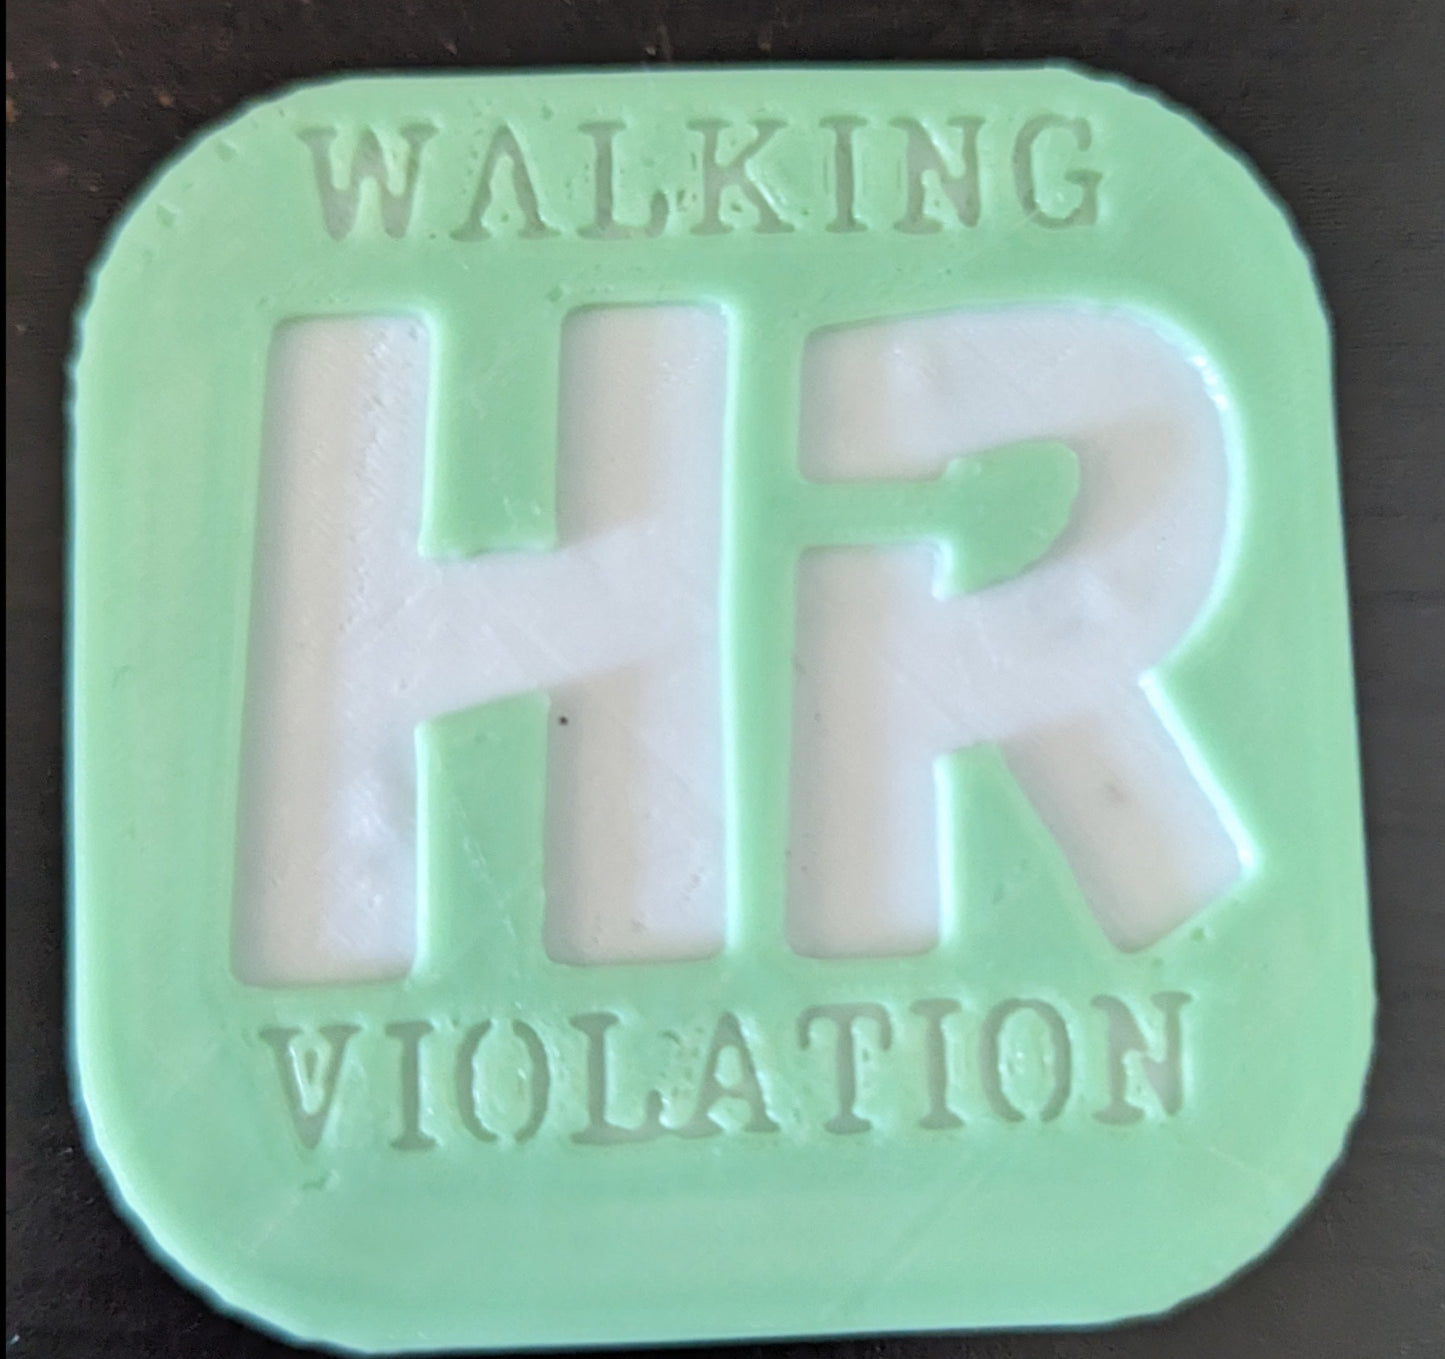 Walking HR Violation 3D Magnet *PICK YOUR COLOR & SIZE*